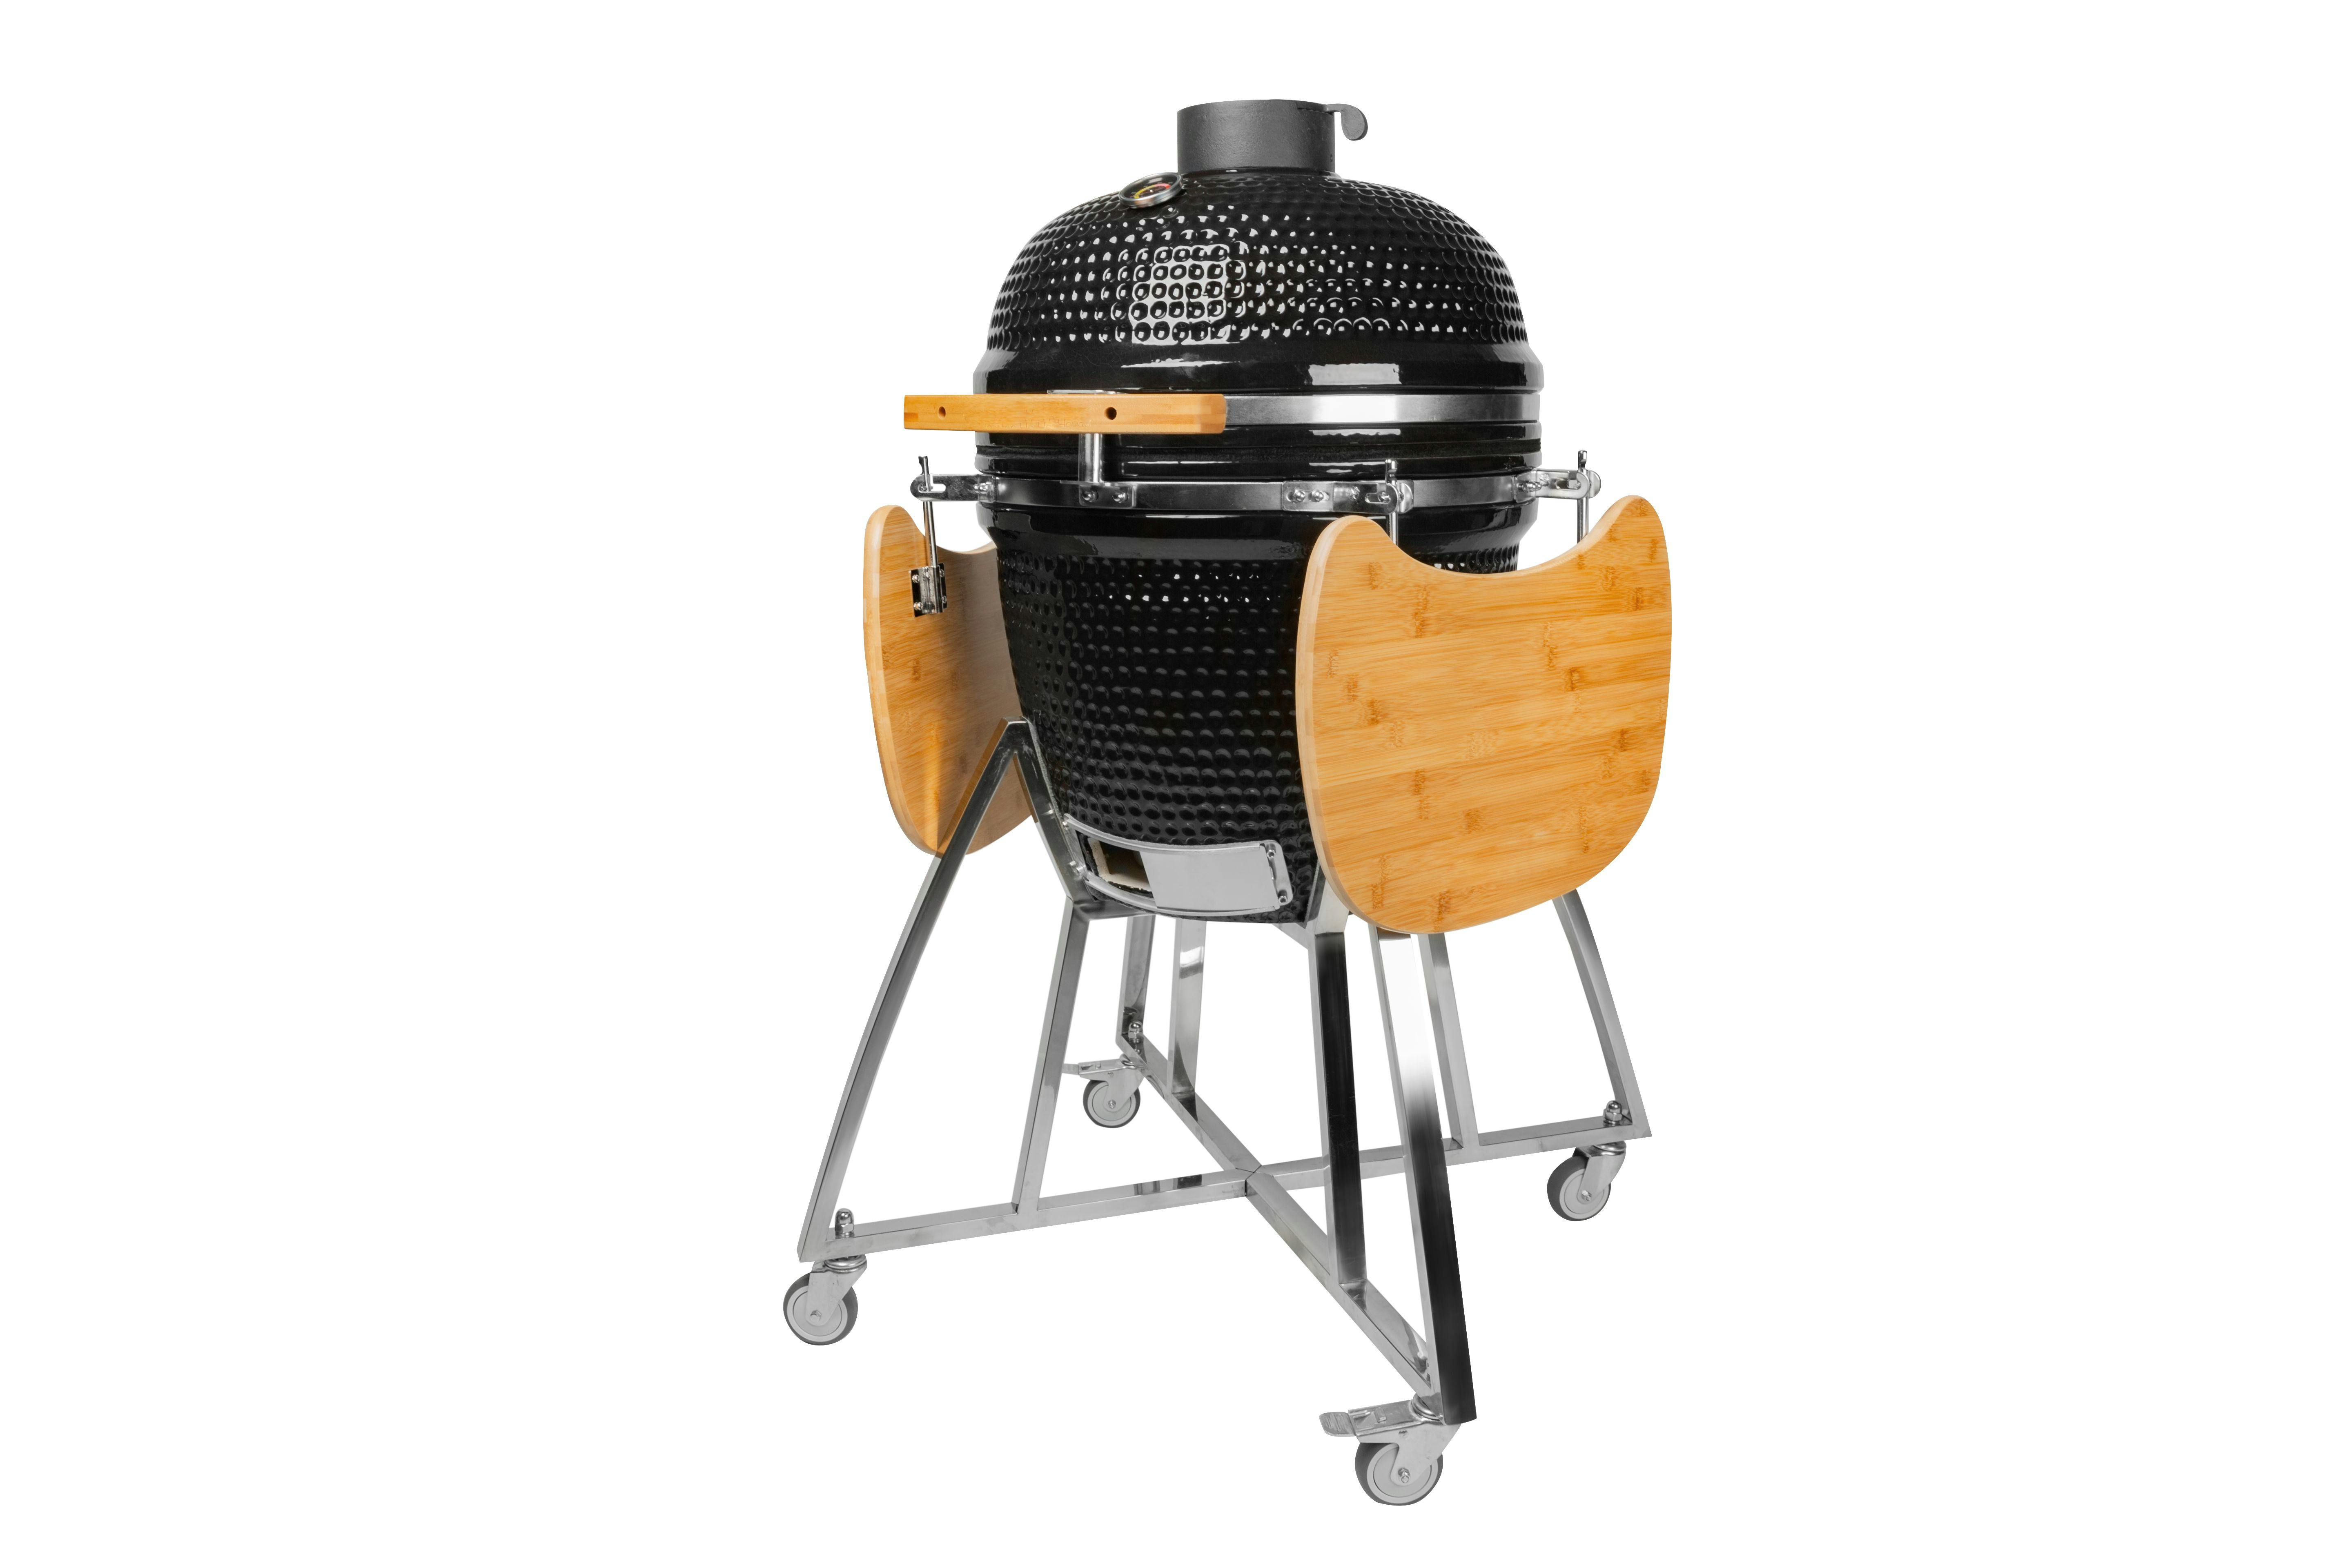 Tarrington House Smoker Classic Auplex keramische barbecue, RVS/hout/keramiek, Ø46.7, 130x74x120cm, aan de wielen, zwart | MAKRO Webshop